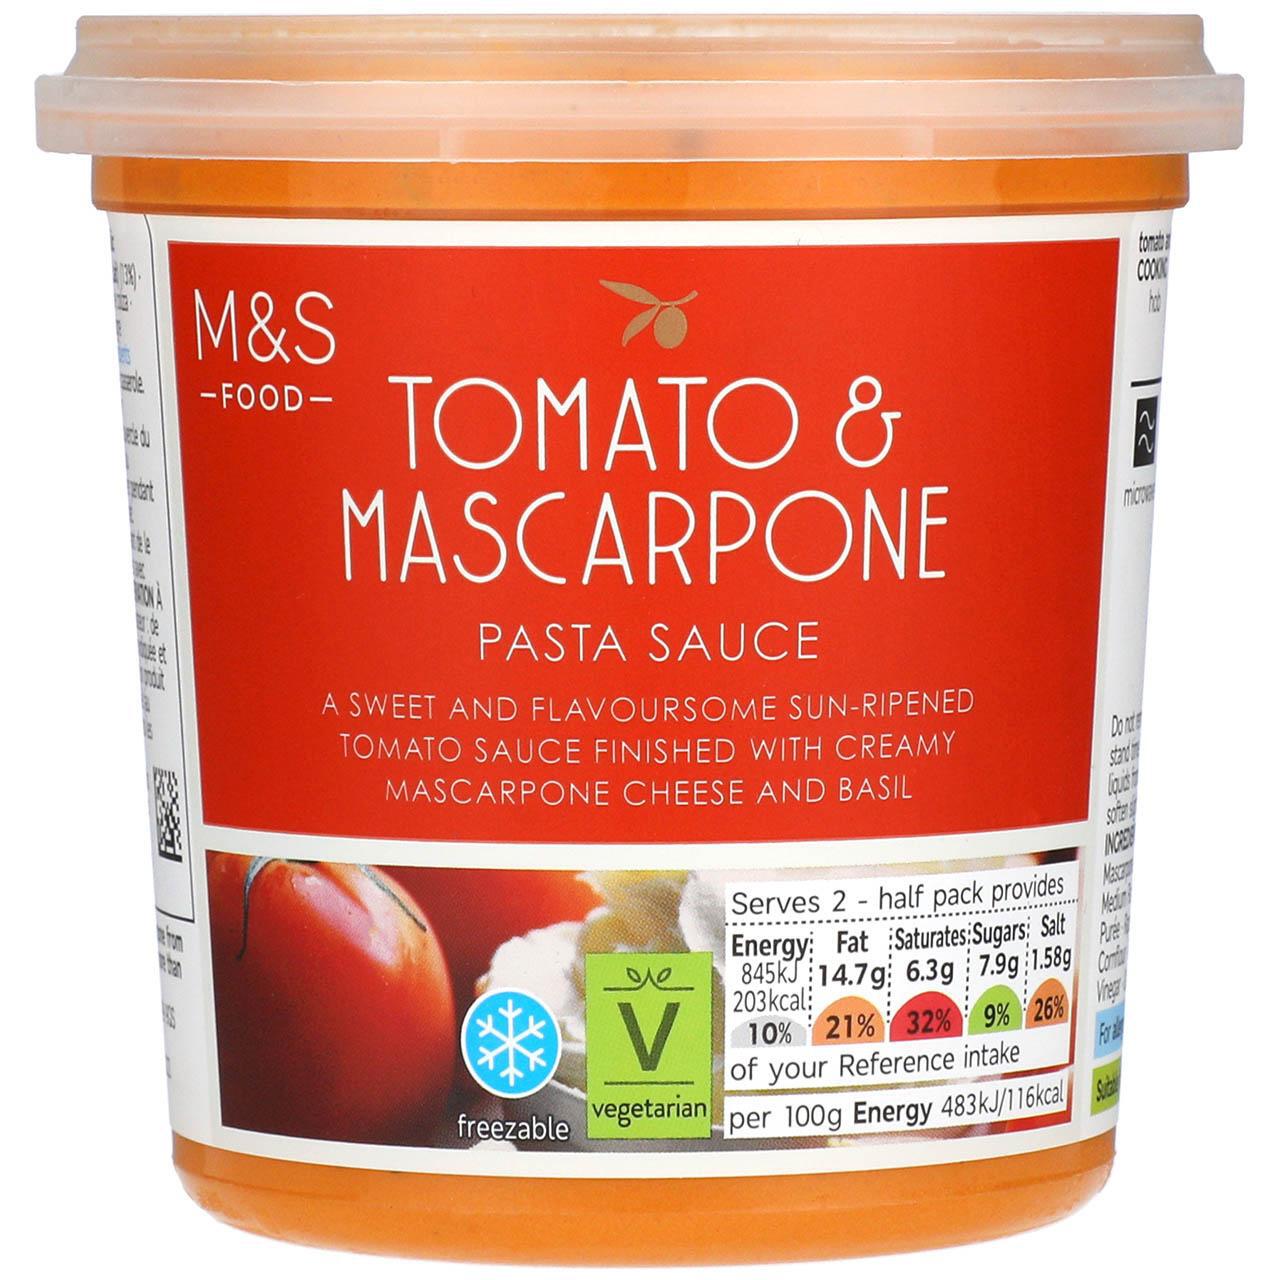 M&S Tomato & Mascarpone Sauce 350g